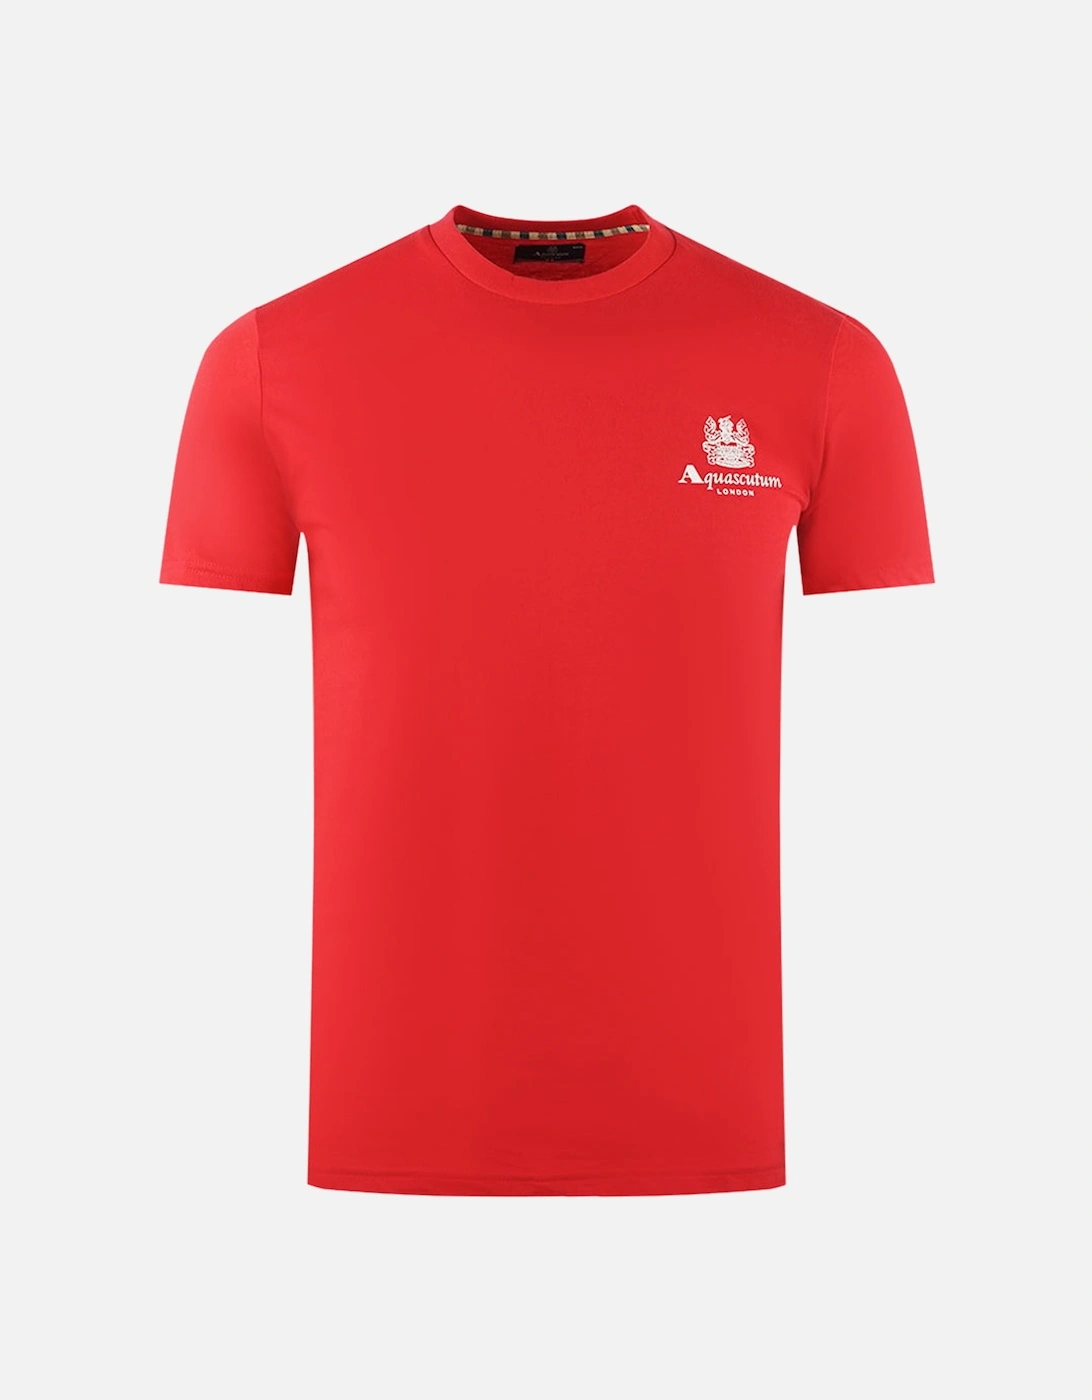 London Aldis Brand Logo On Chest Red T-Shirt, 3 of 2